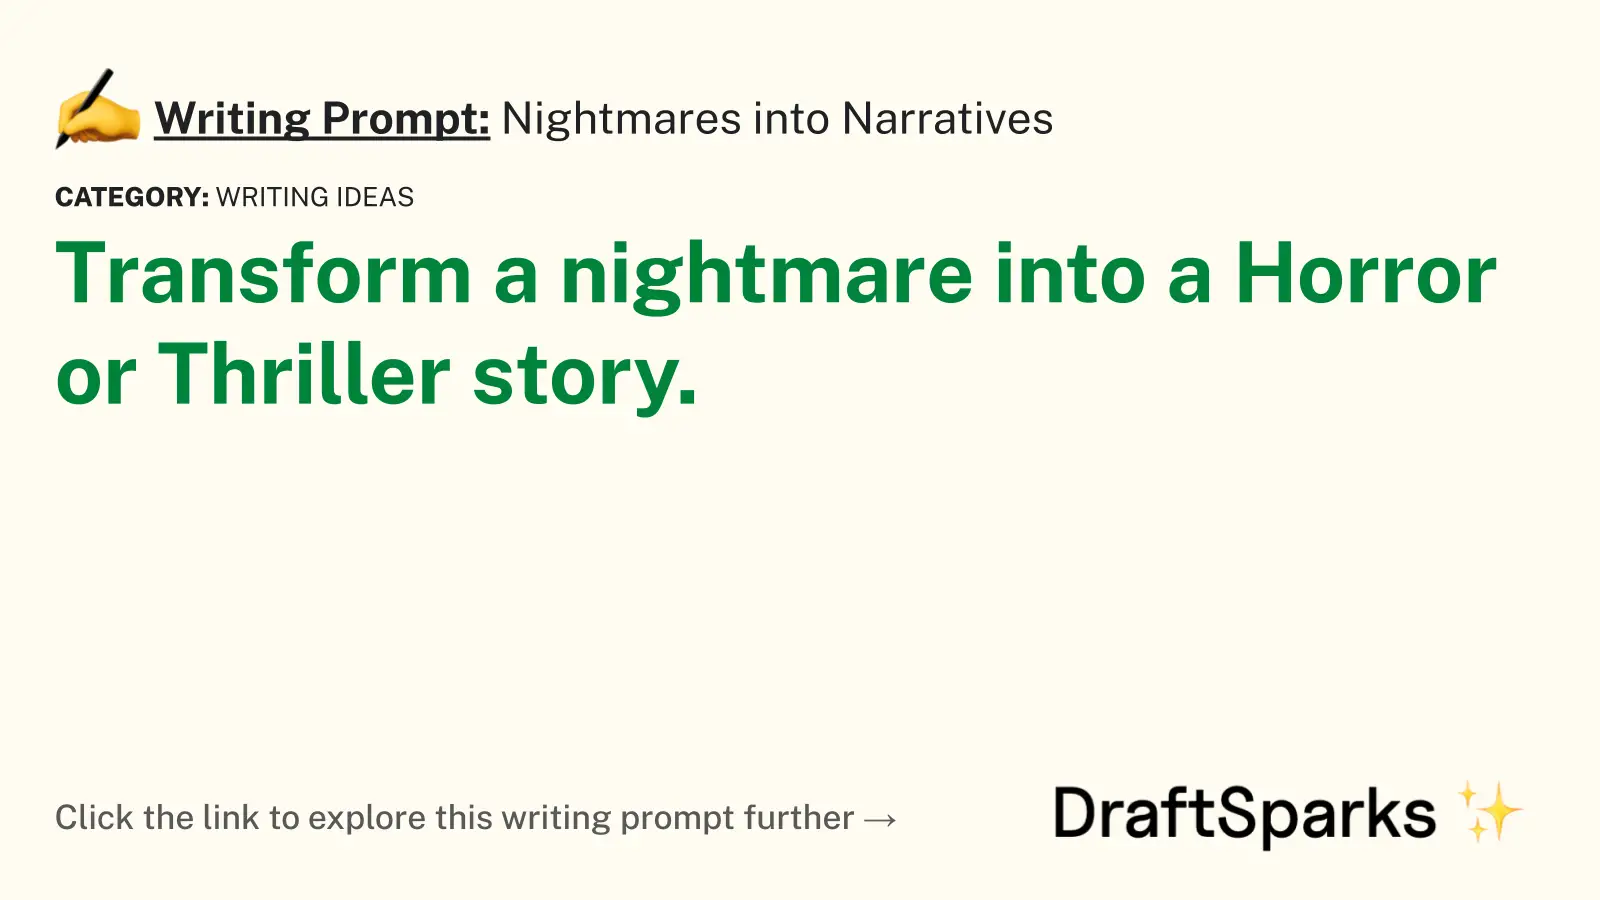 Nightmares into Narratives